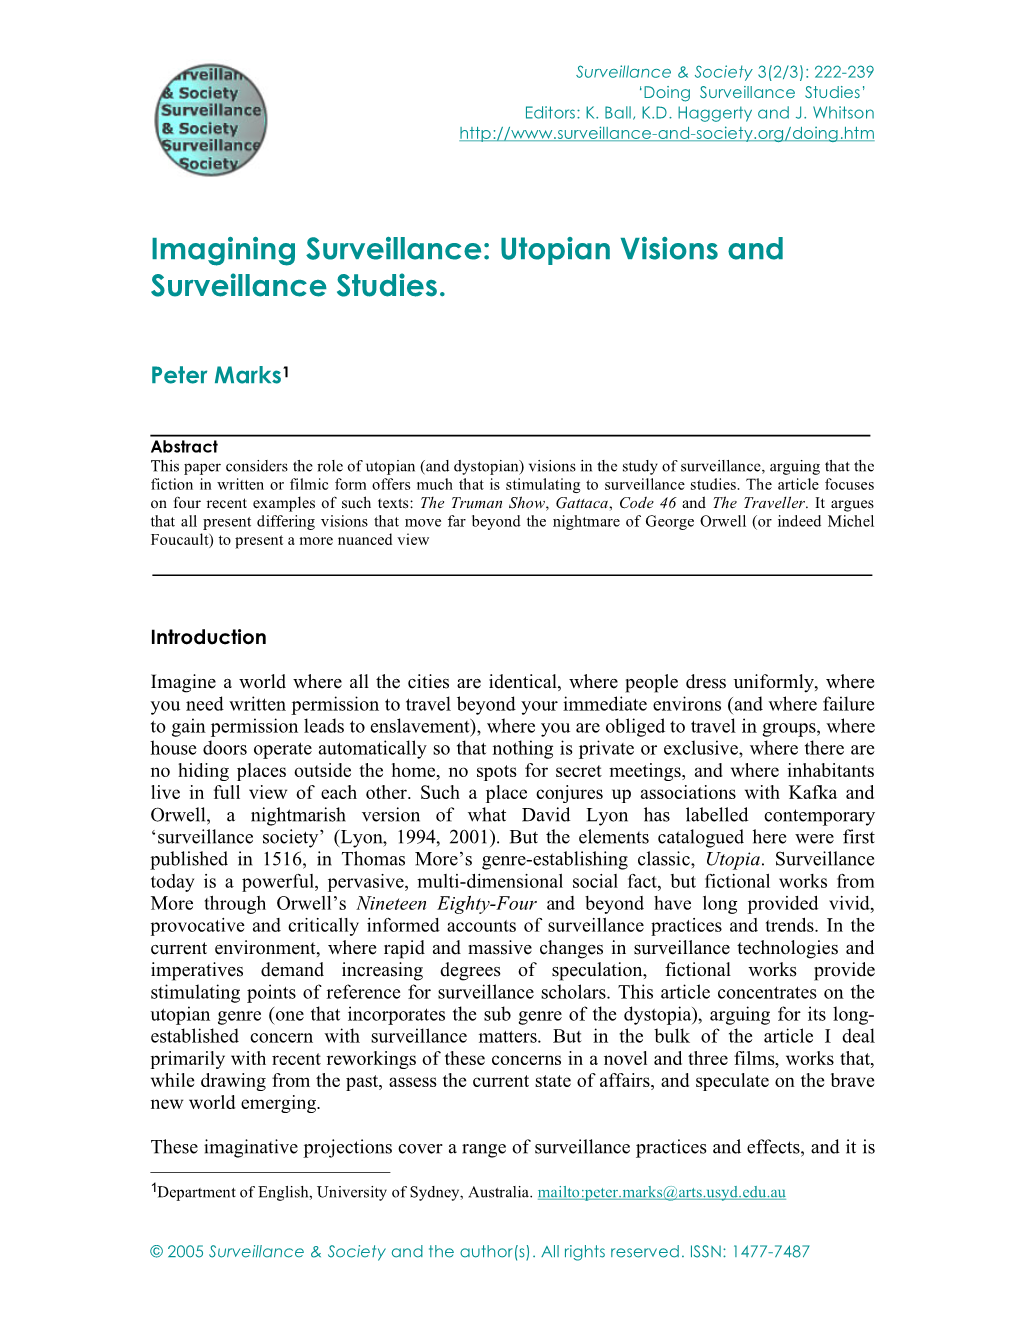 Imagining Surveillance: Utopian Visions and Surveillance Studies